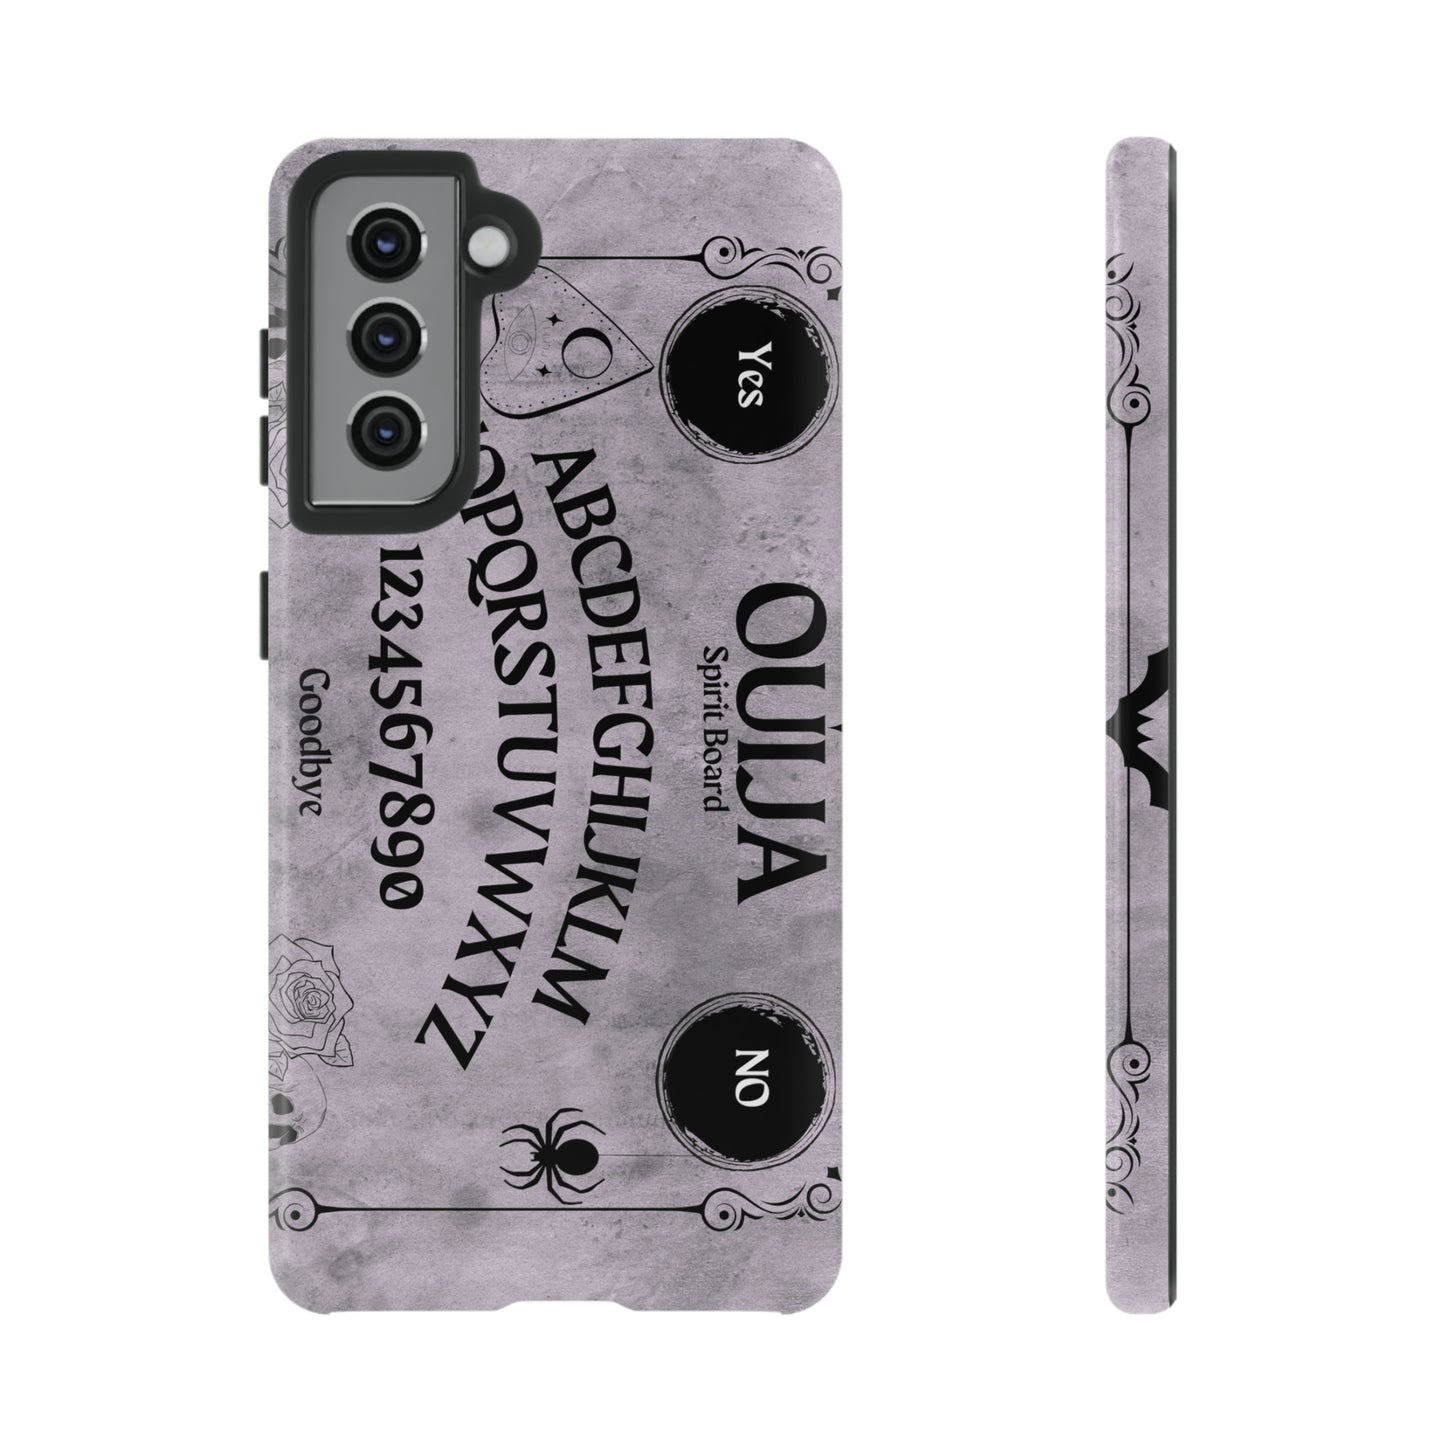 Ouija Board Tough Phone Cases For Samsung iPhone GooglePhone CaseVTZdesignsSamsung Galaxy S21GlossyAccessoriesGlossyhalloween